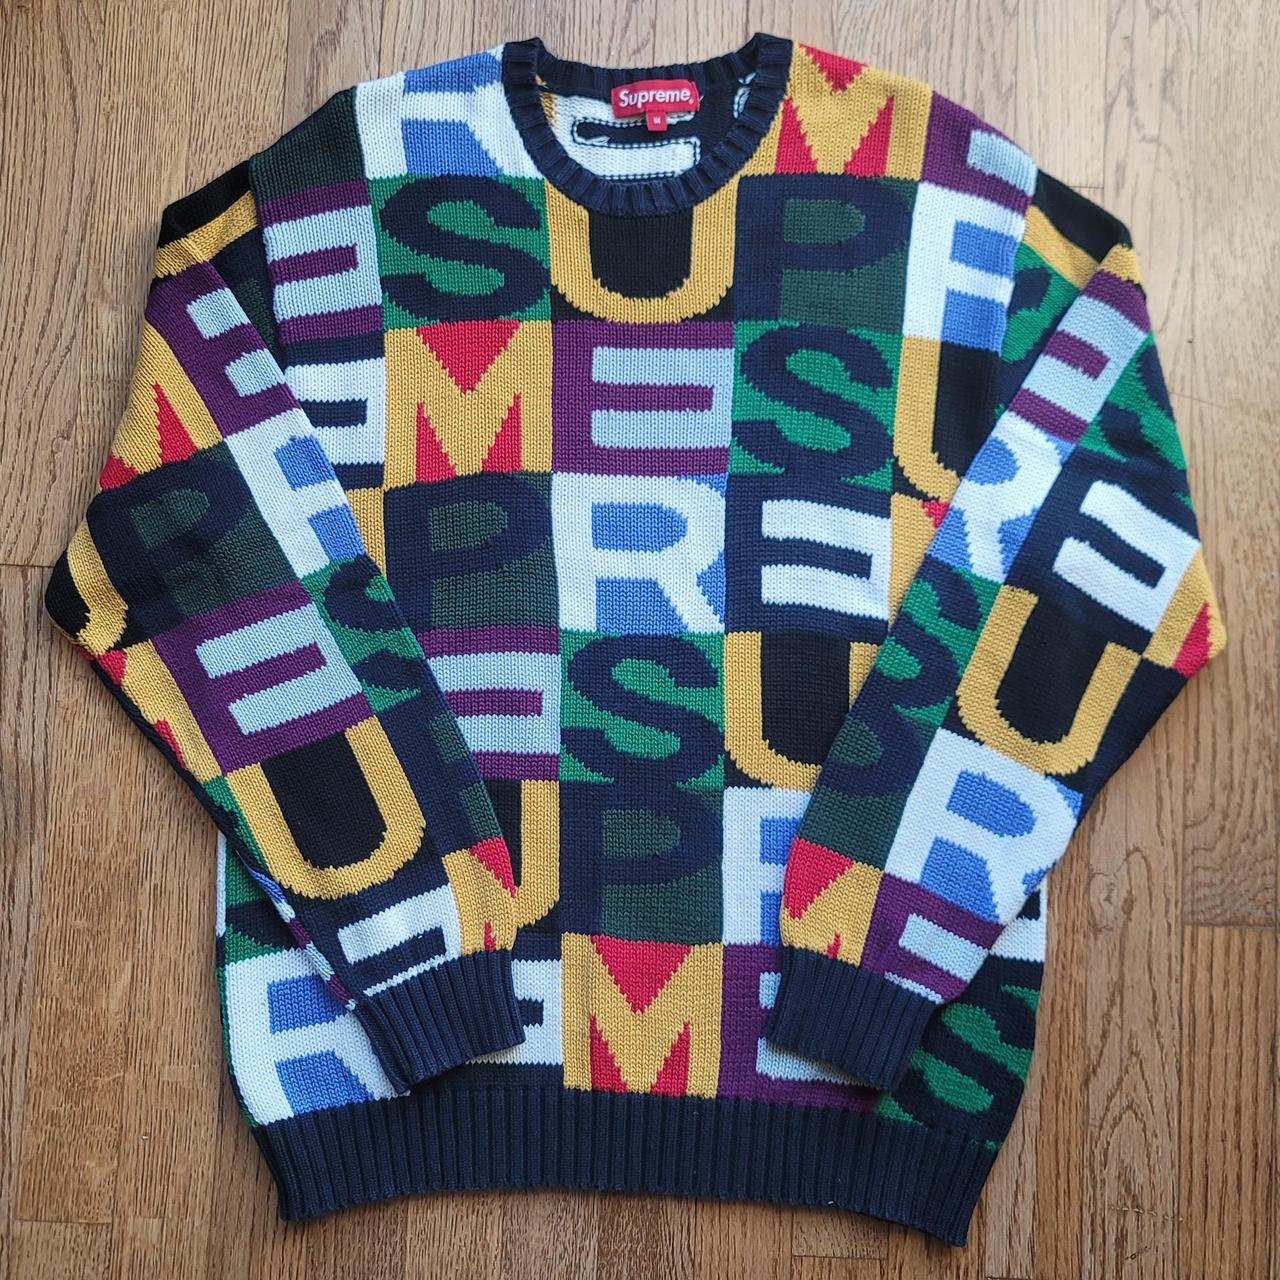 Supreme Big Letters Sweater Multicolor Used Supreme... - Depop